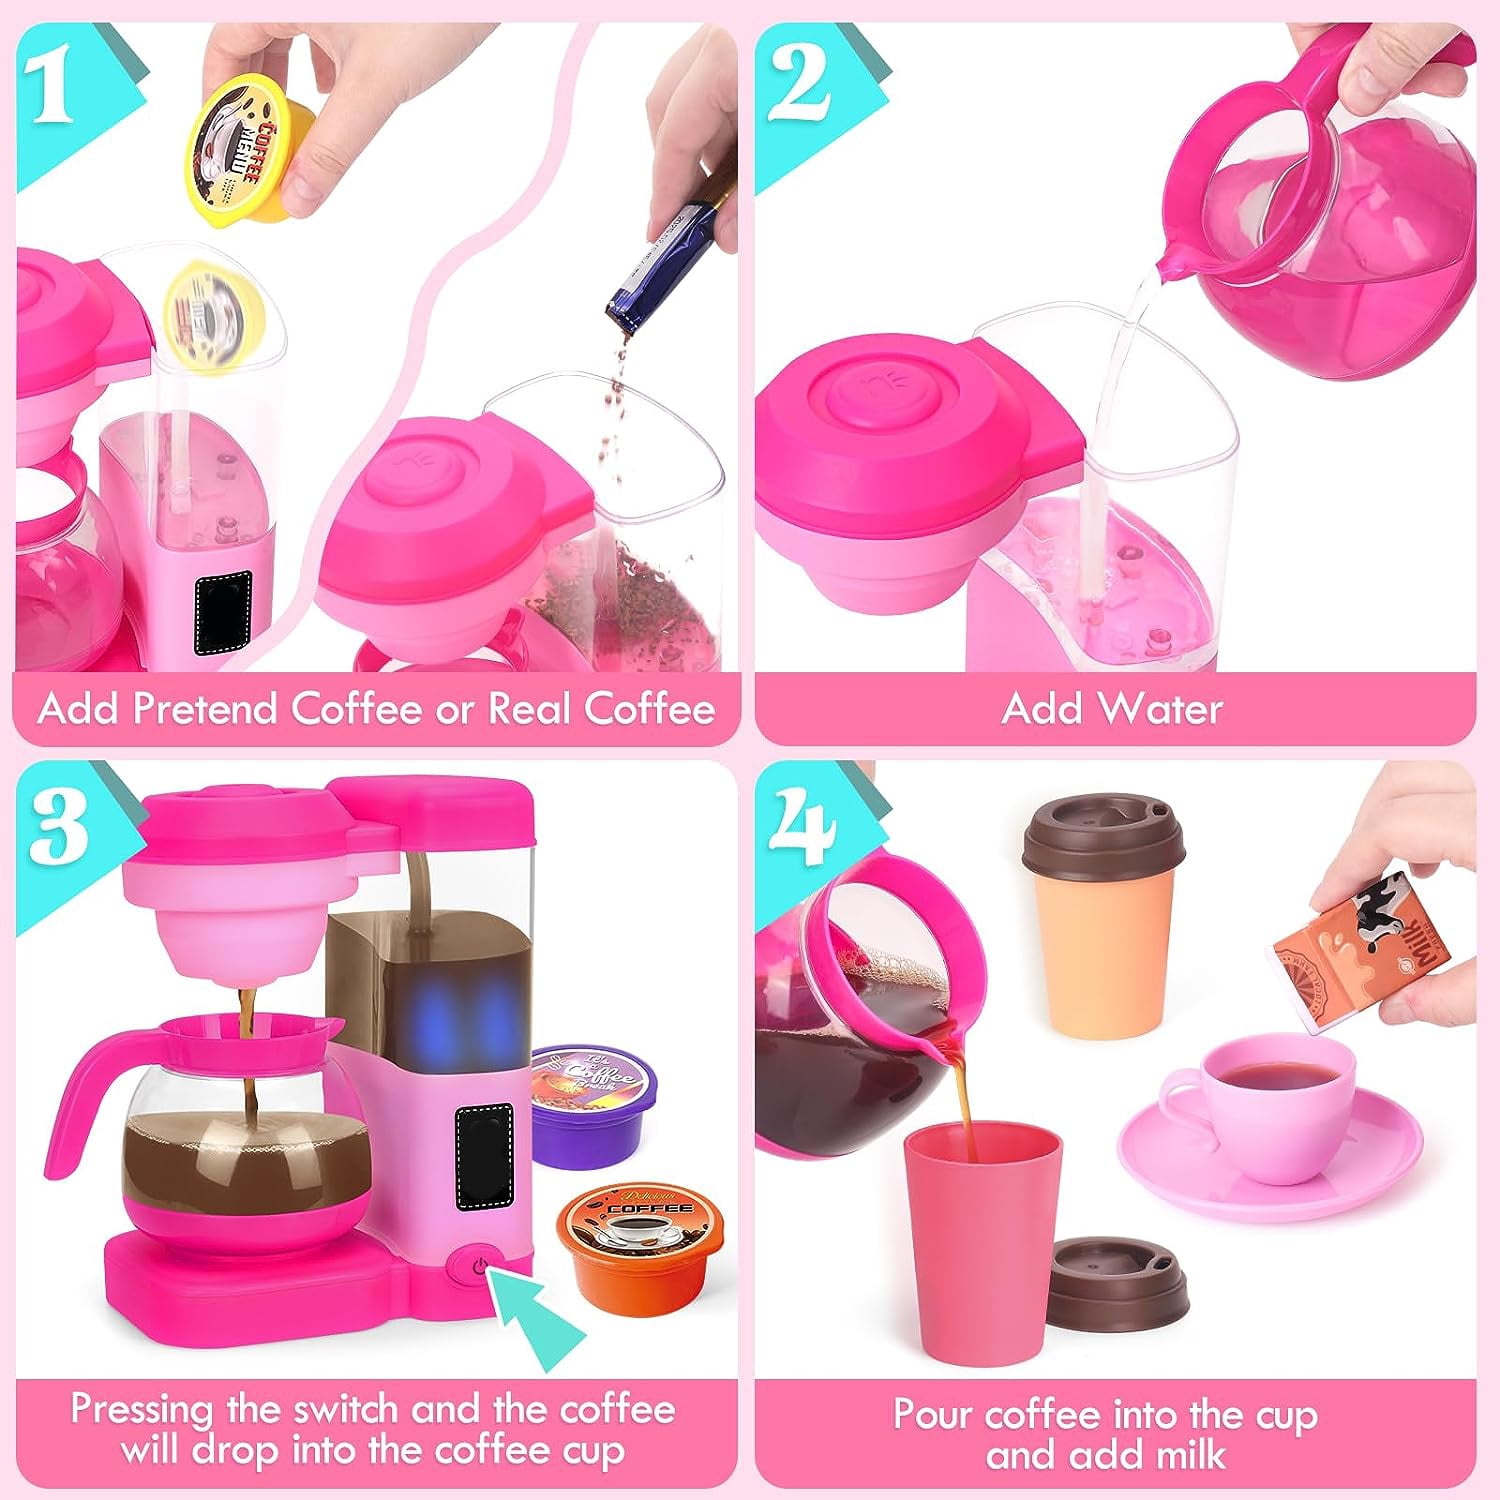 Toy Kitchen Light Up Coffee Maker Pink Makes Sound